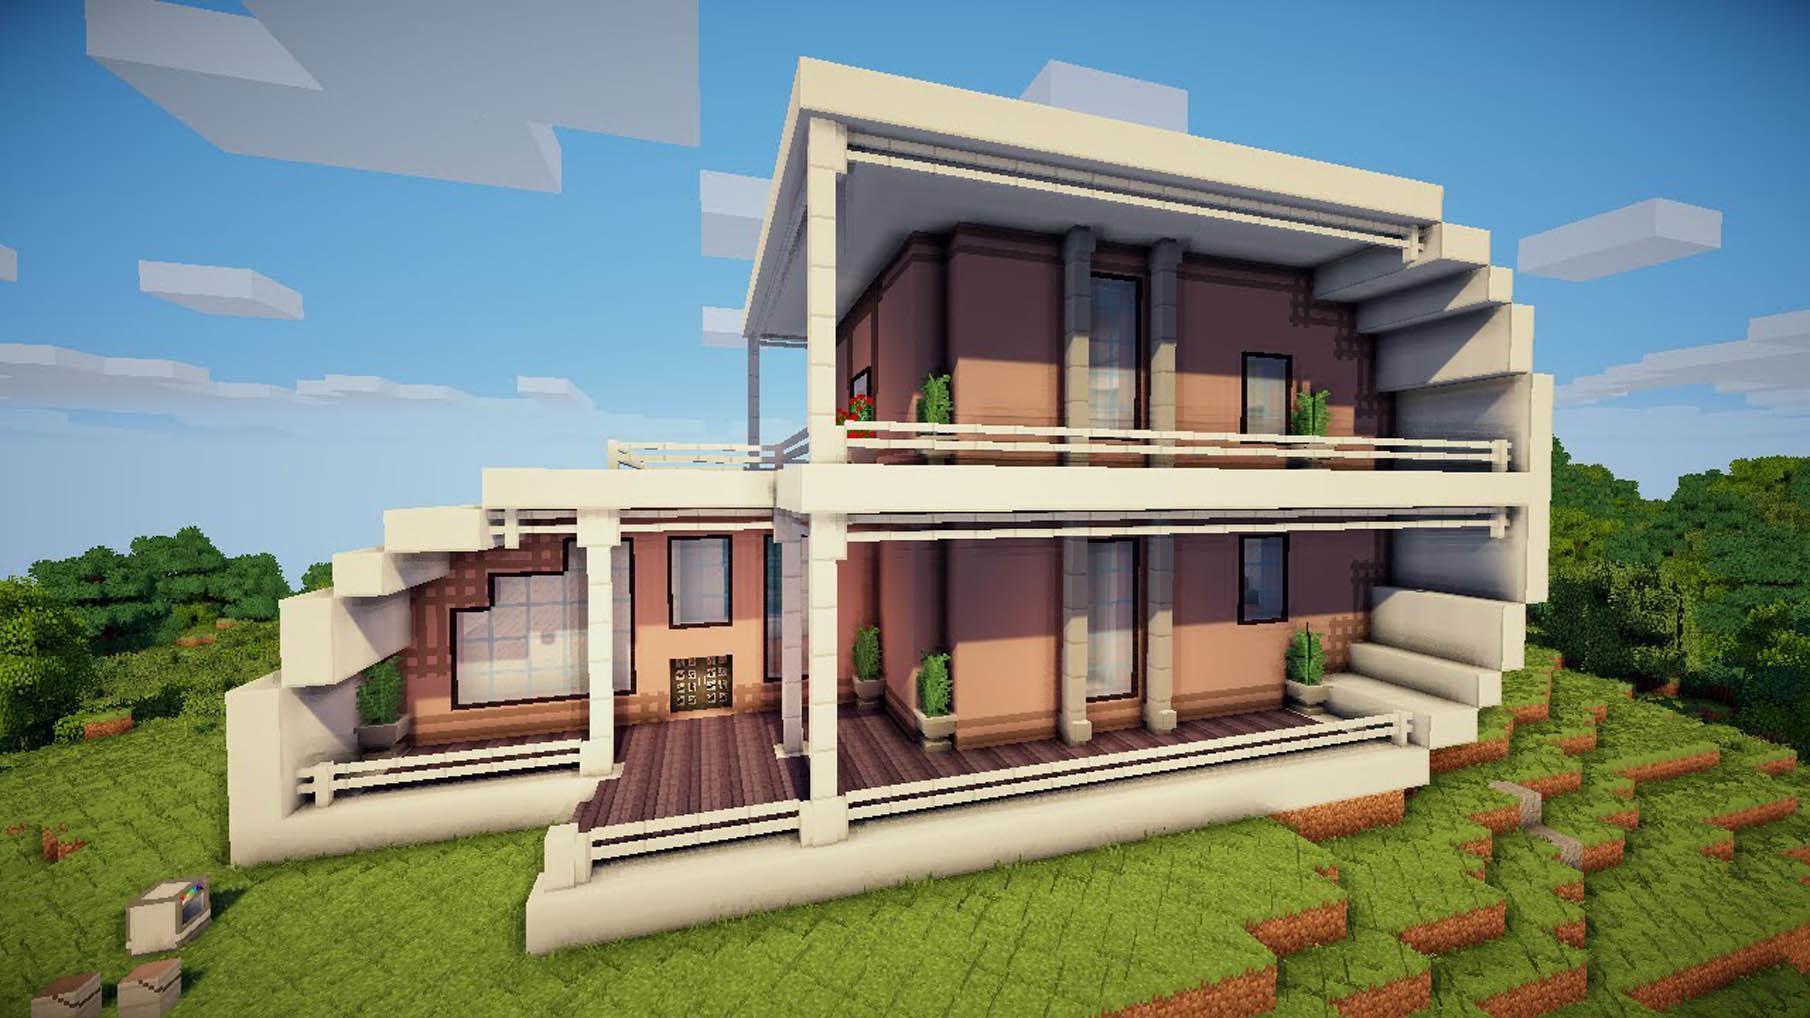 Minecraft properties. Модерн Хаус в майнкрафт 1.1.5. Особняк Ренессанс в МАЙНКРАФТЕ. Дом Модерн в МАЙНКРАФТЕ. Красивый дом в МАЙНКРАФТЕ.